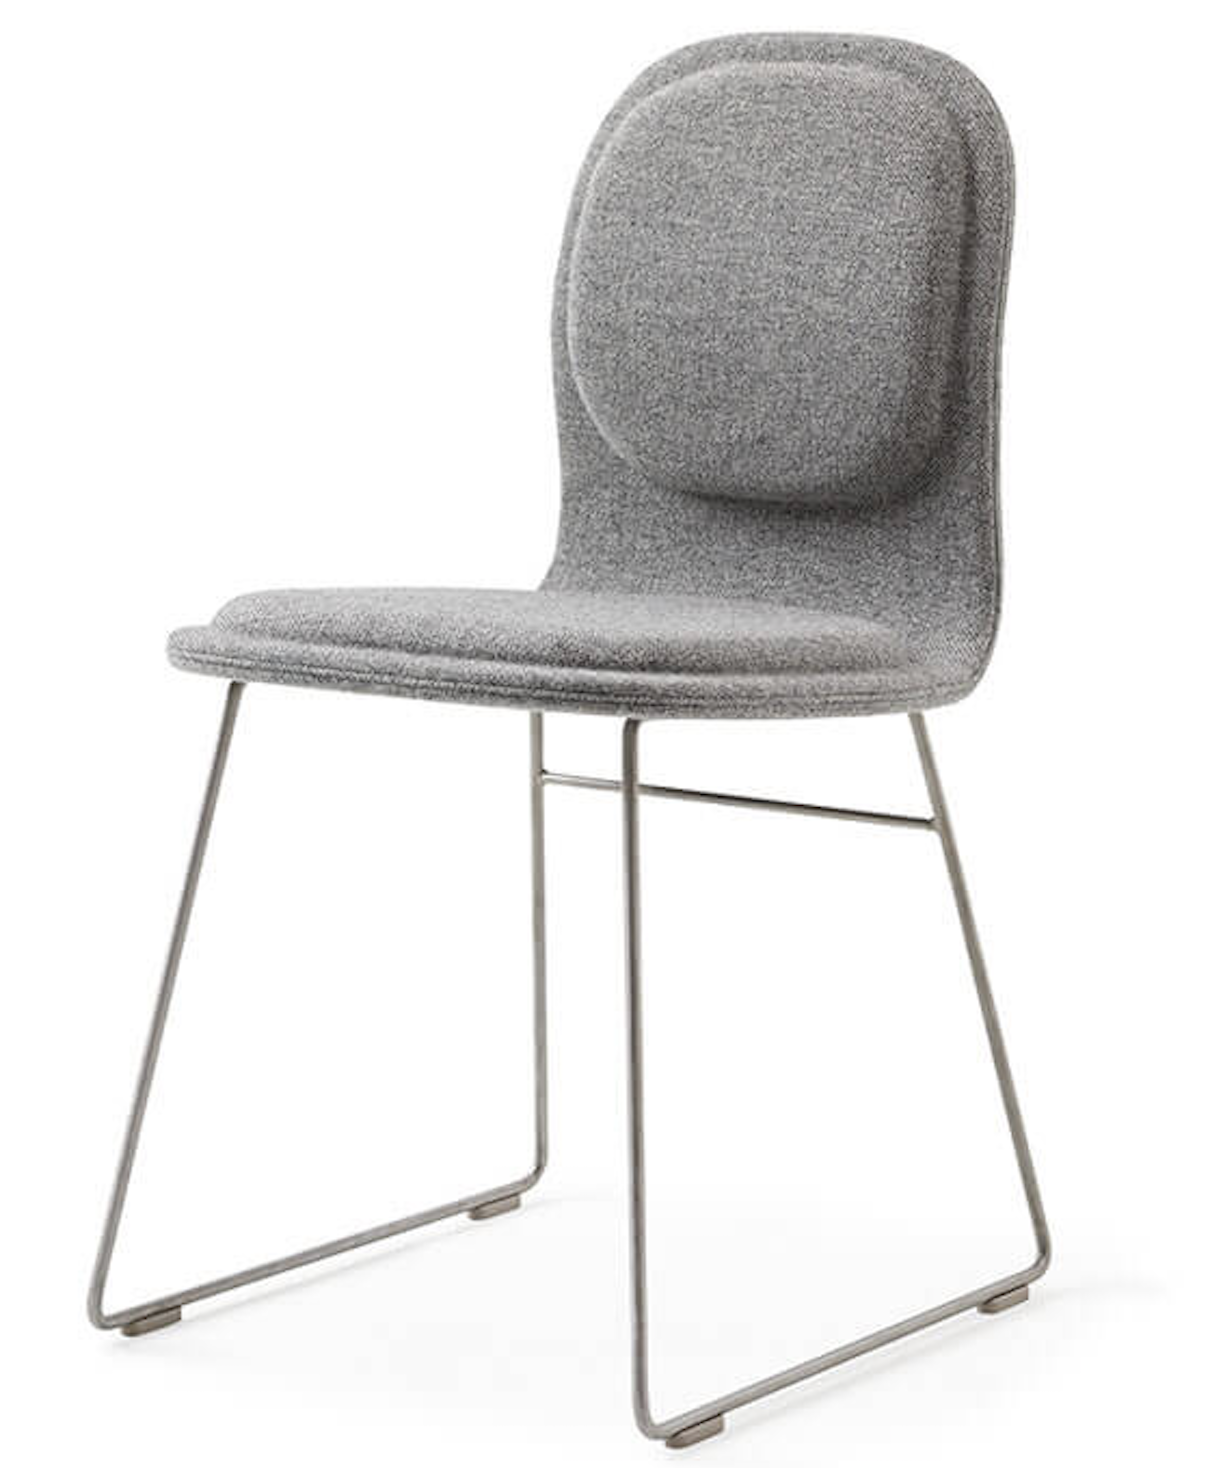 Product Image Hi Pad chair